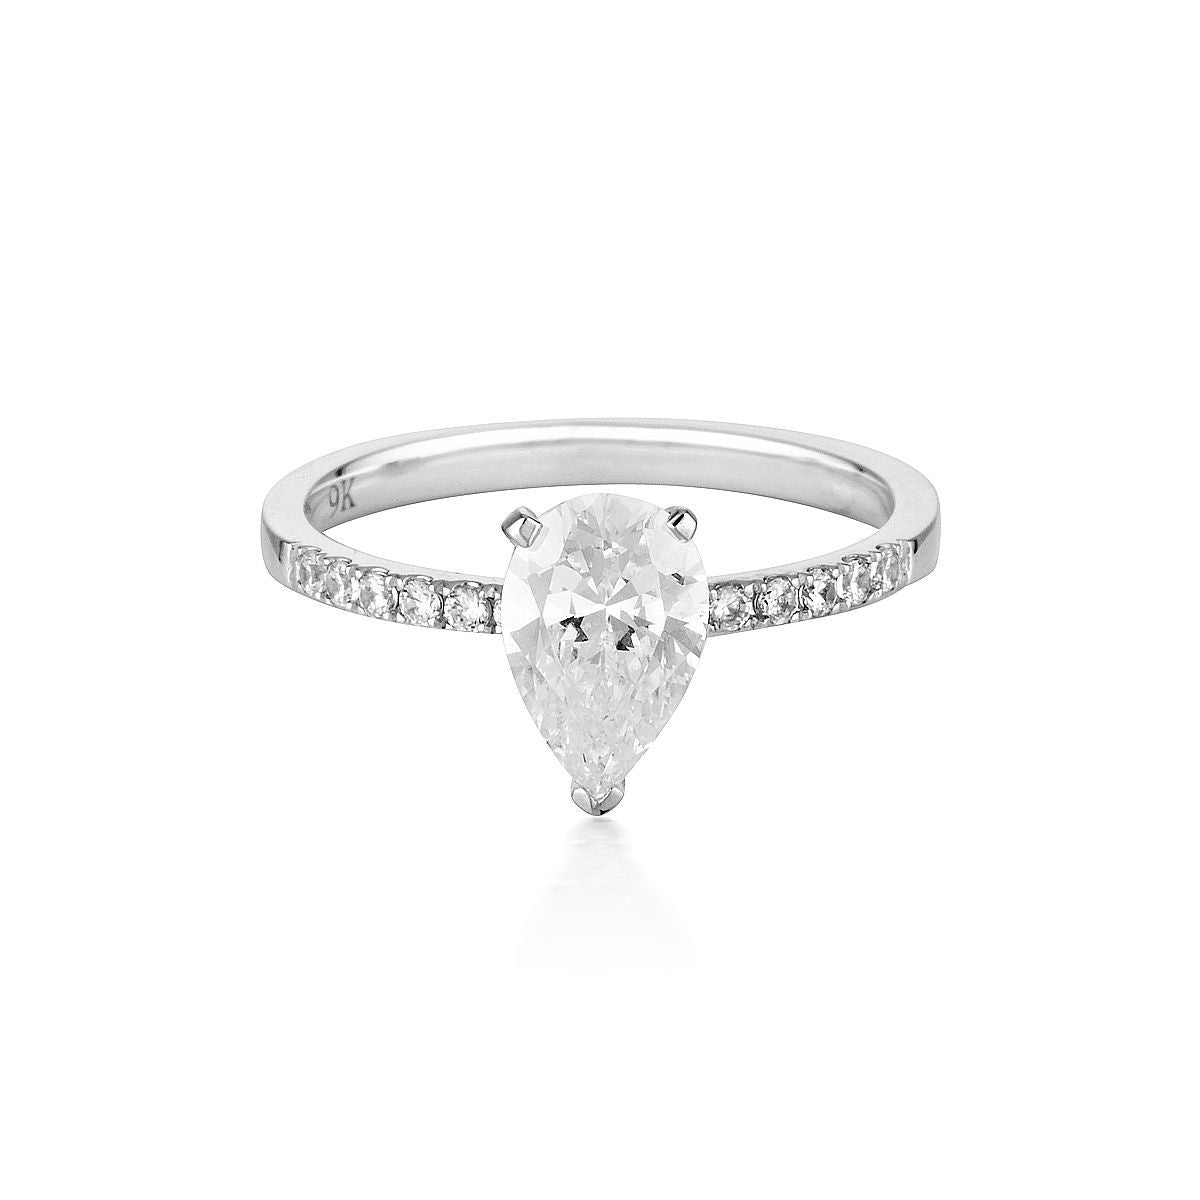 Georgini - Pear Cut And Round Brilliant 1.5Ct Diamond Stimulant Engagement Ring In 9Ct White Gold